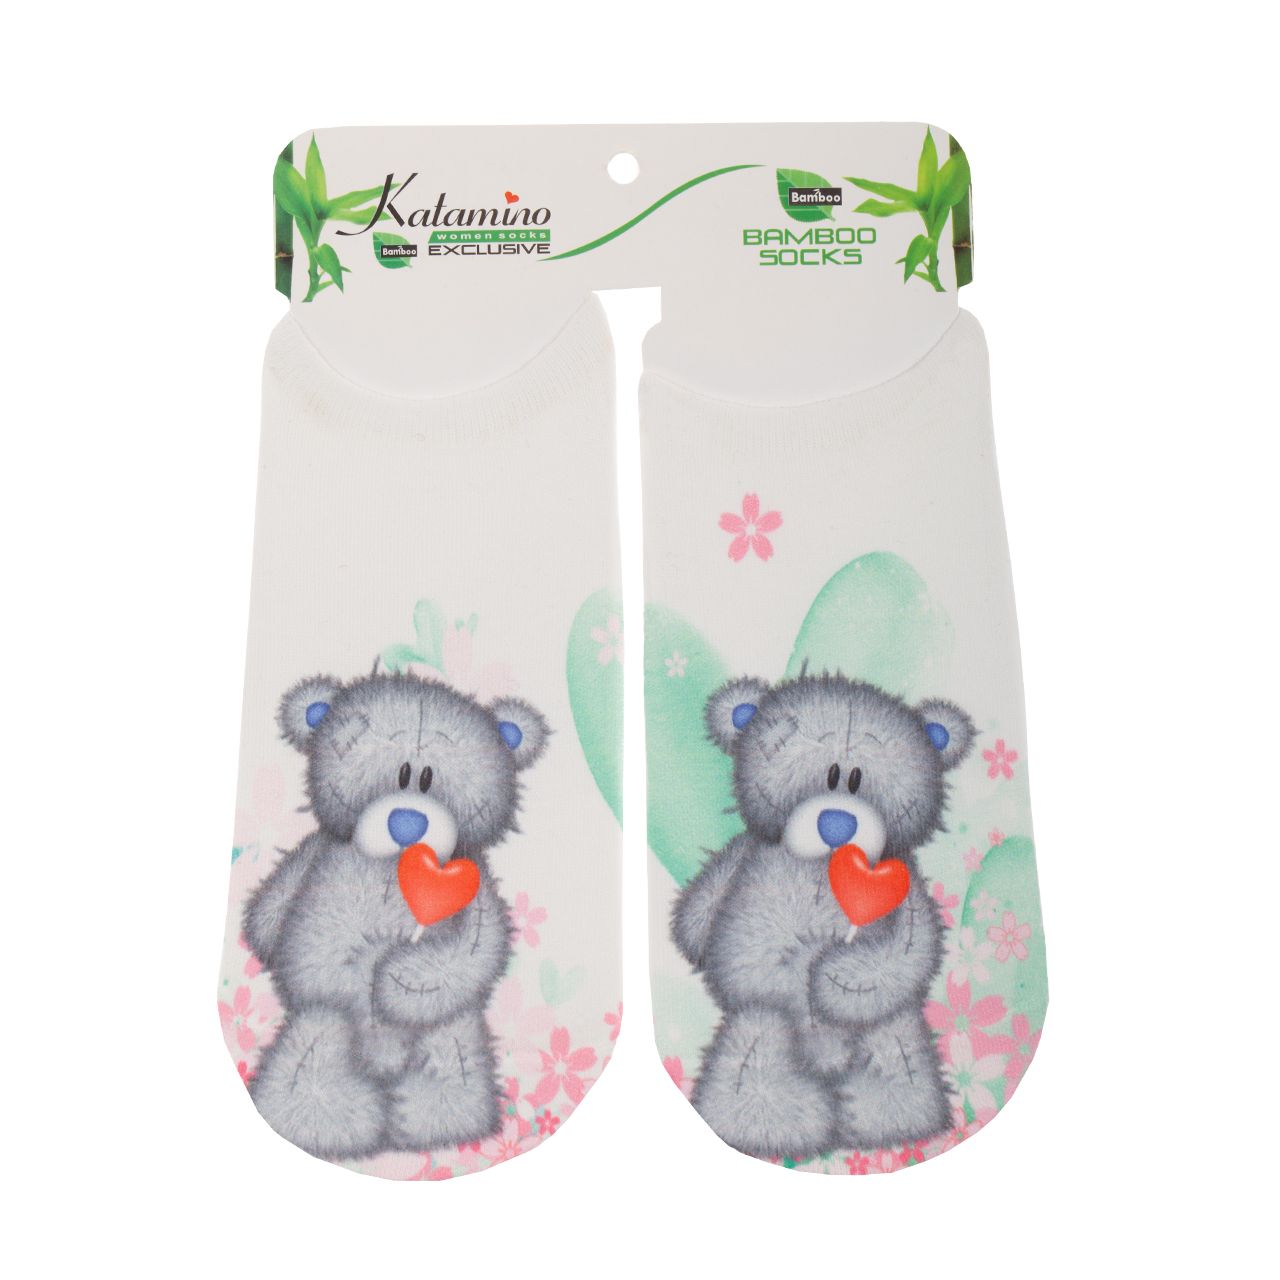 جوراب دخترانه کاتامینو طرح خرس زخمی  -  - 1